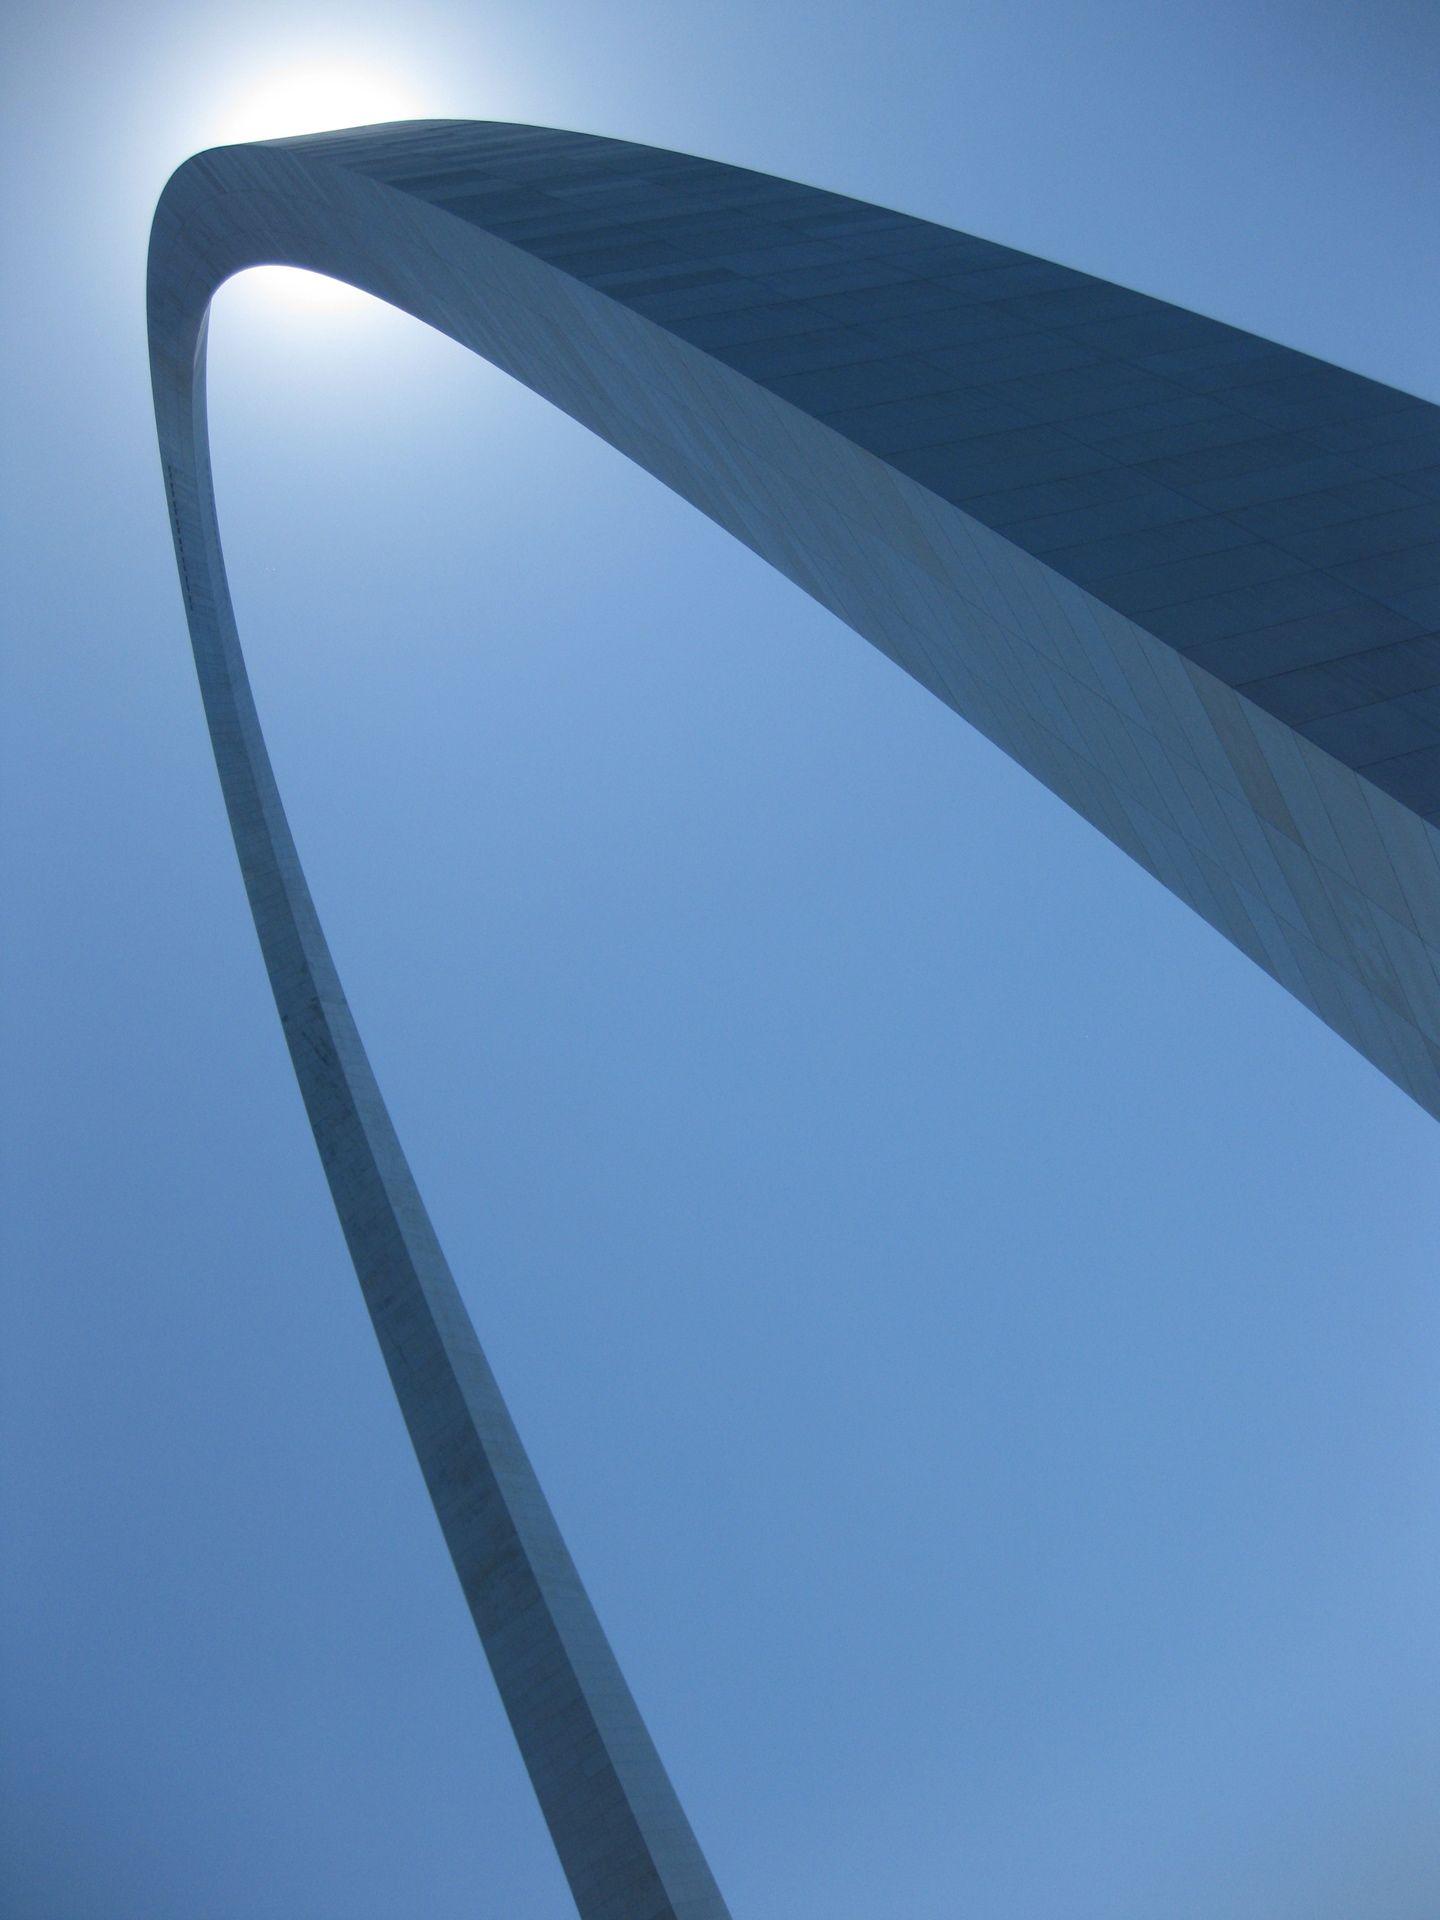 St. Louis Arch Desktop Wallpapers - Top Free St. Louis Arch Desktop Backgrounds - WallpaperAccess